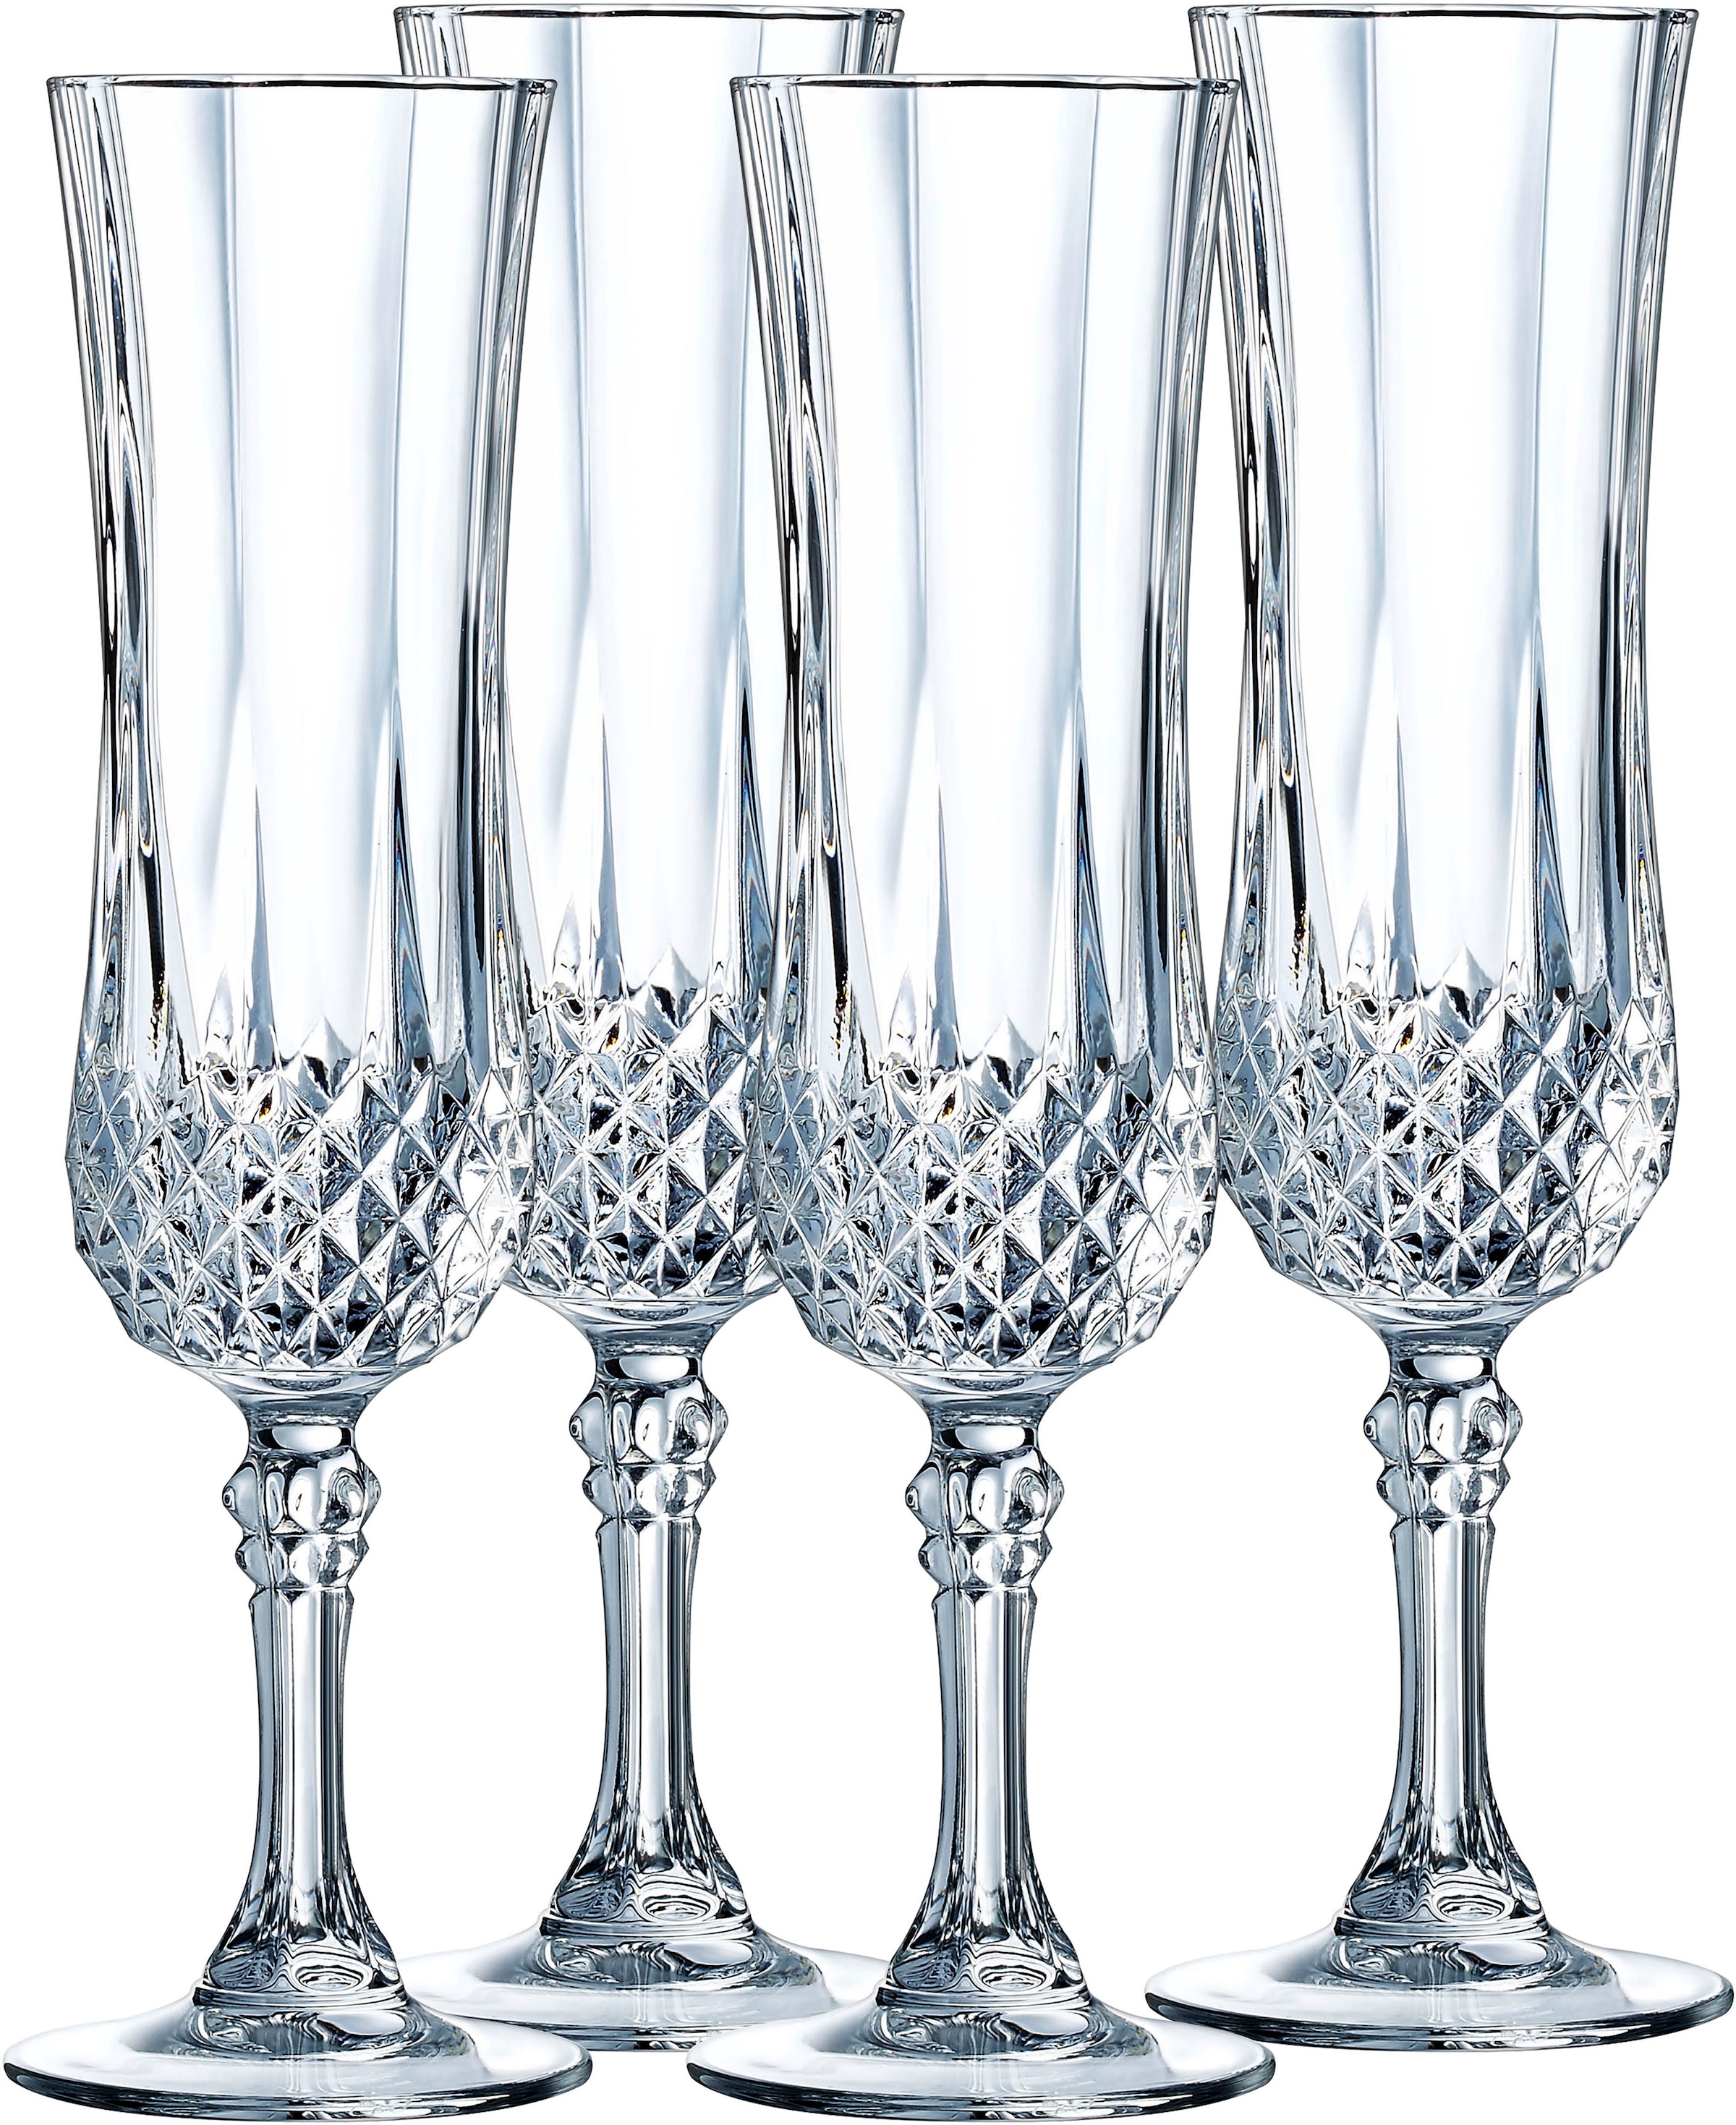 Luminarc Sektglas »Trinkglas Longchamp Eclat«, (Set, 4 tlg.), Gläser Set, sehr hochwertiges Kristallinglas